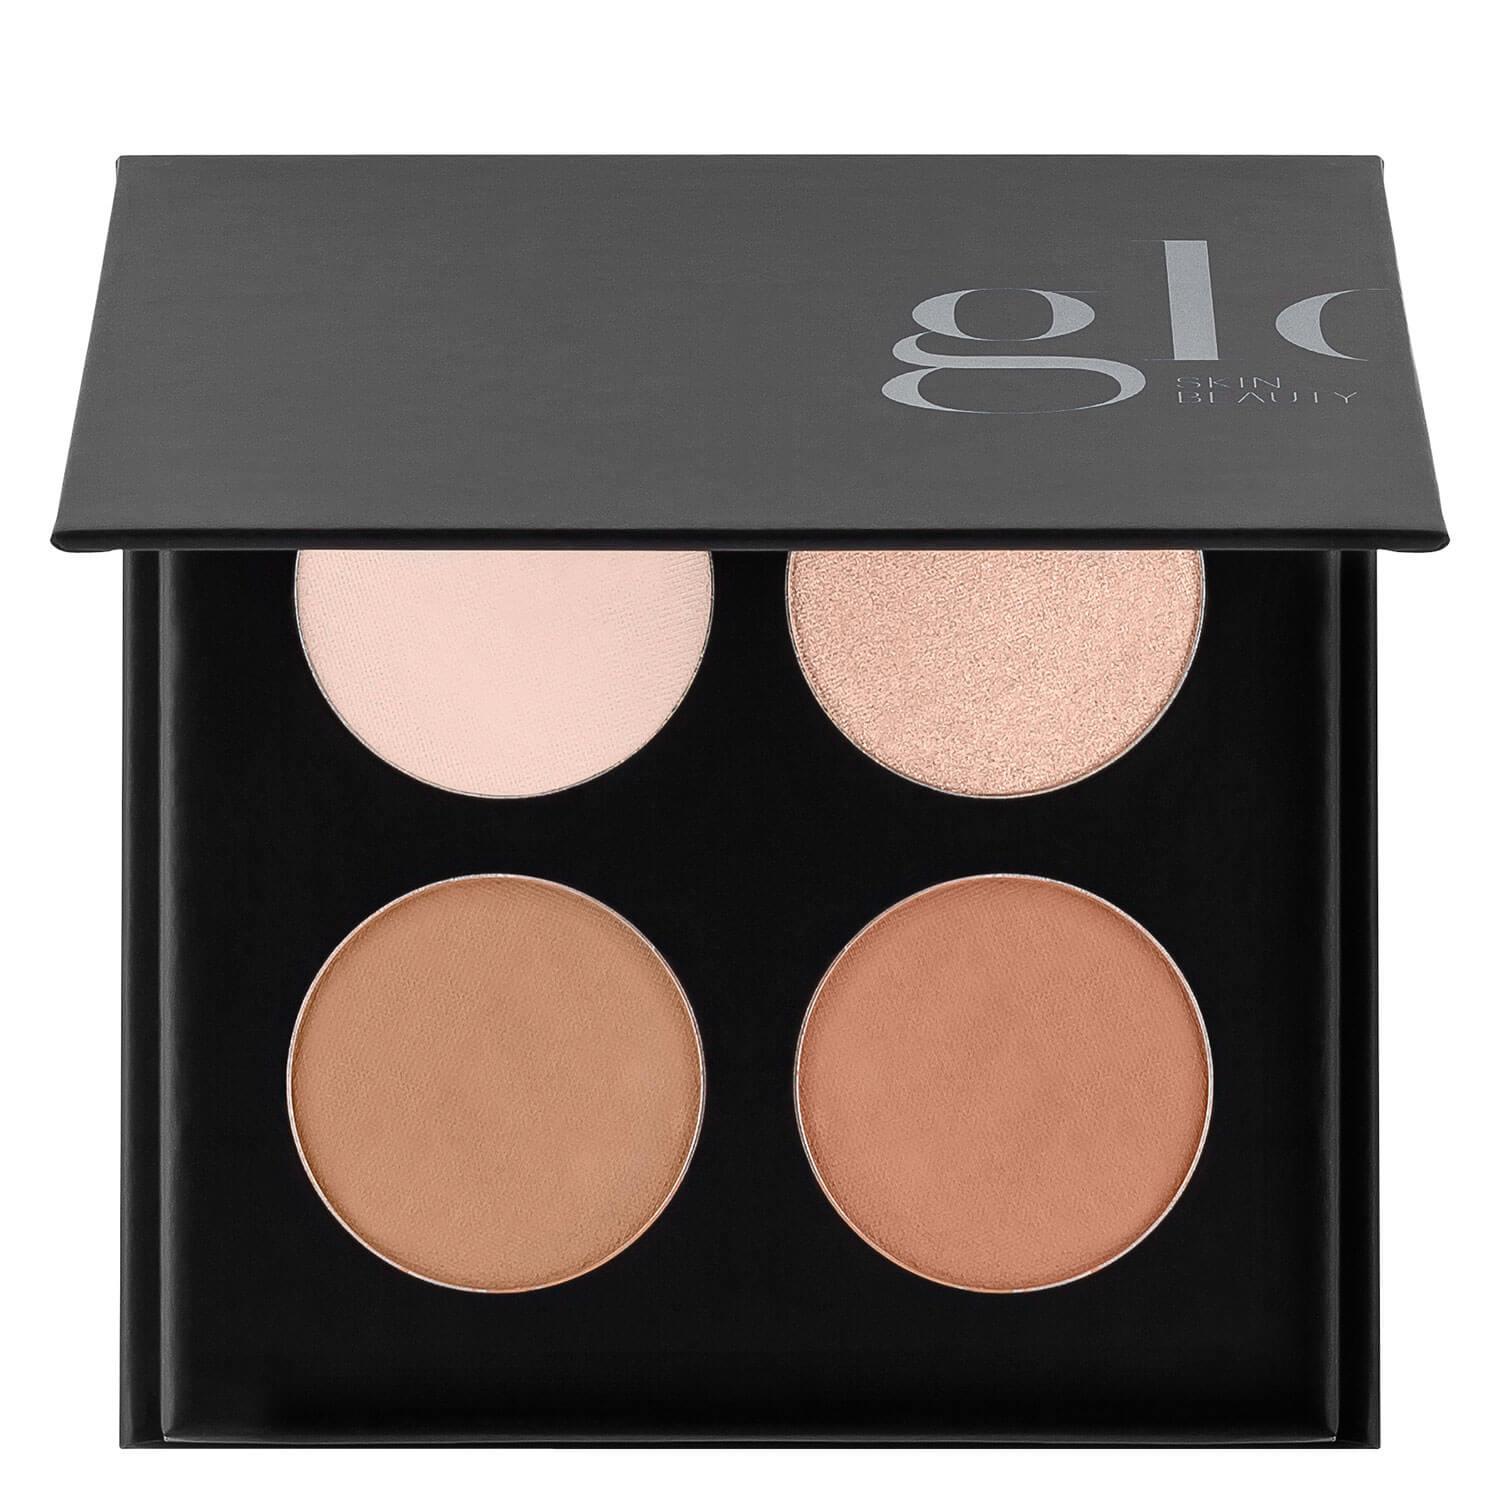 Glo Skin Beauty Contour - Contour Kit Fair to Light